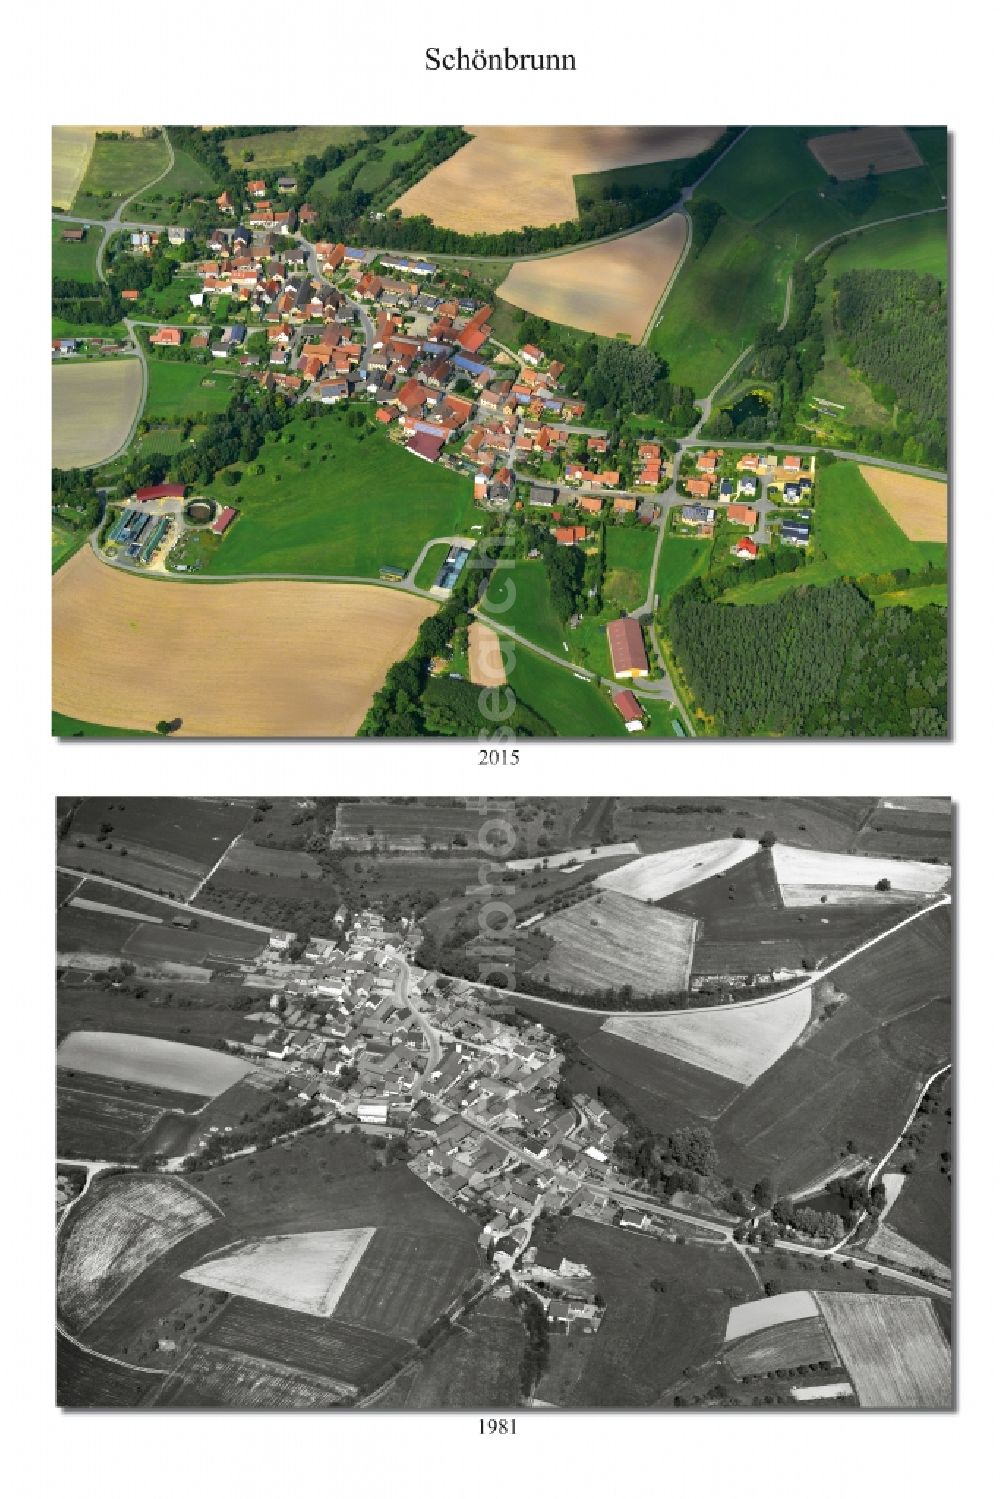 Schönbrunn from the bird's eye view: 1981 and 2015 village - view change of Schoenbrunn in the state Bavaria